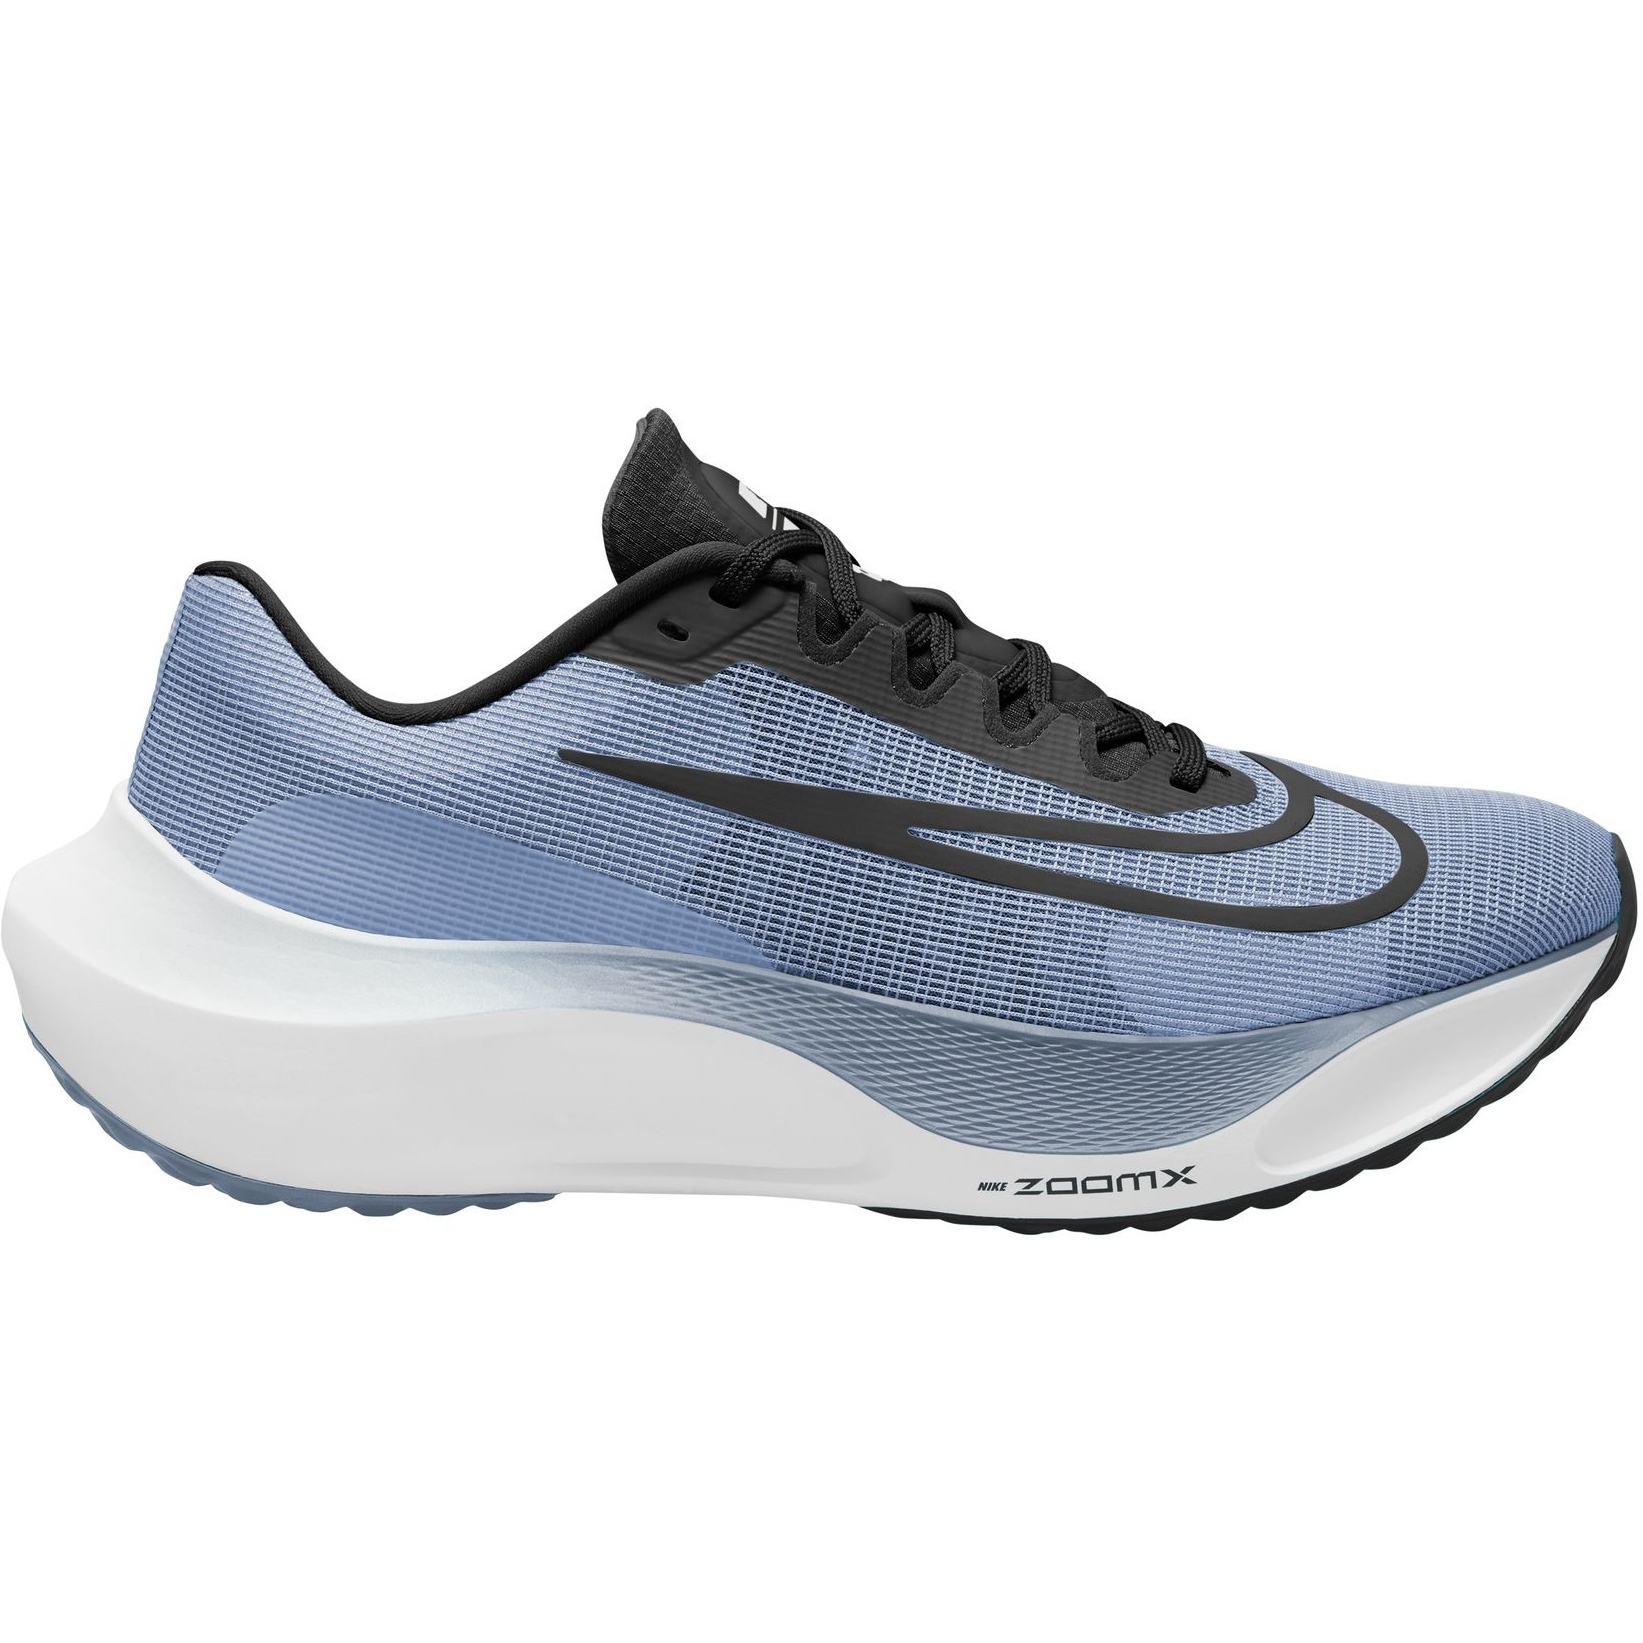 Immagine di Nike Scarpe da corsa Uomo - Zoom Fly 5 - cobalt bliss/black-white-ashen slate DM8968-401